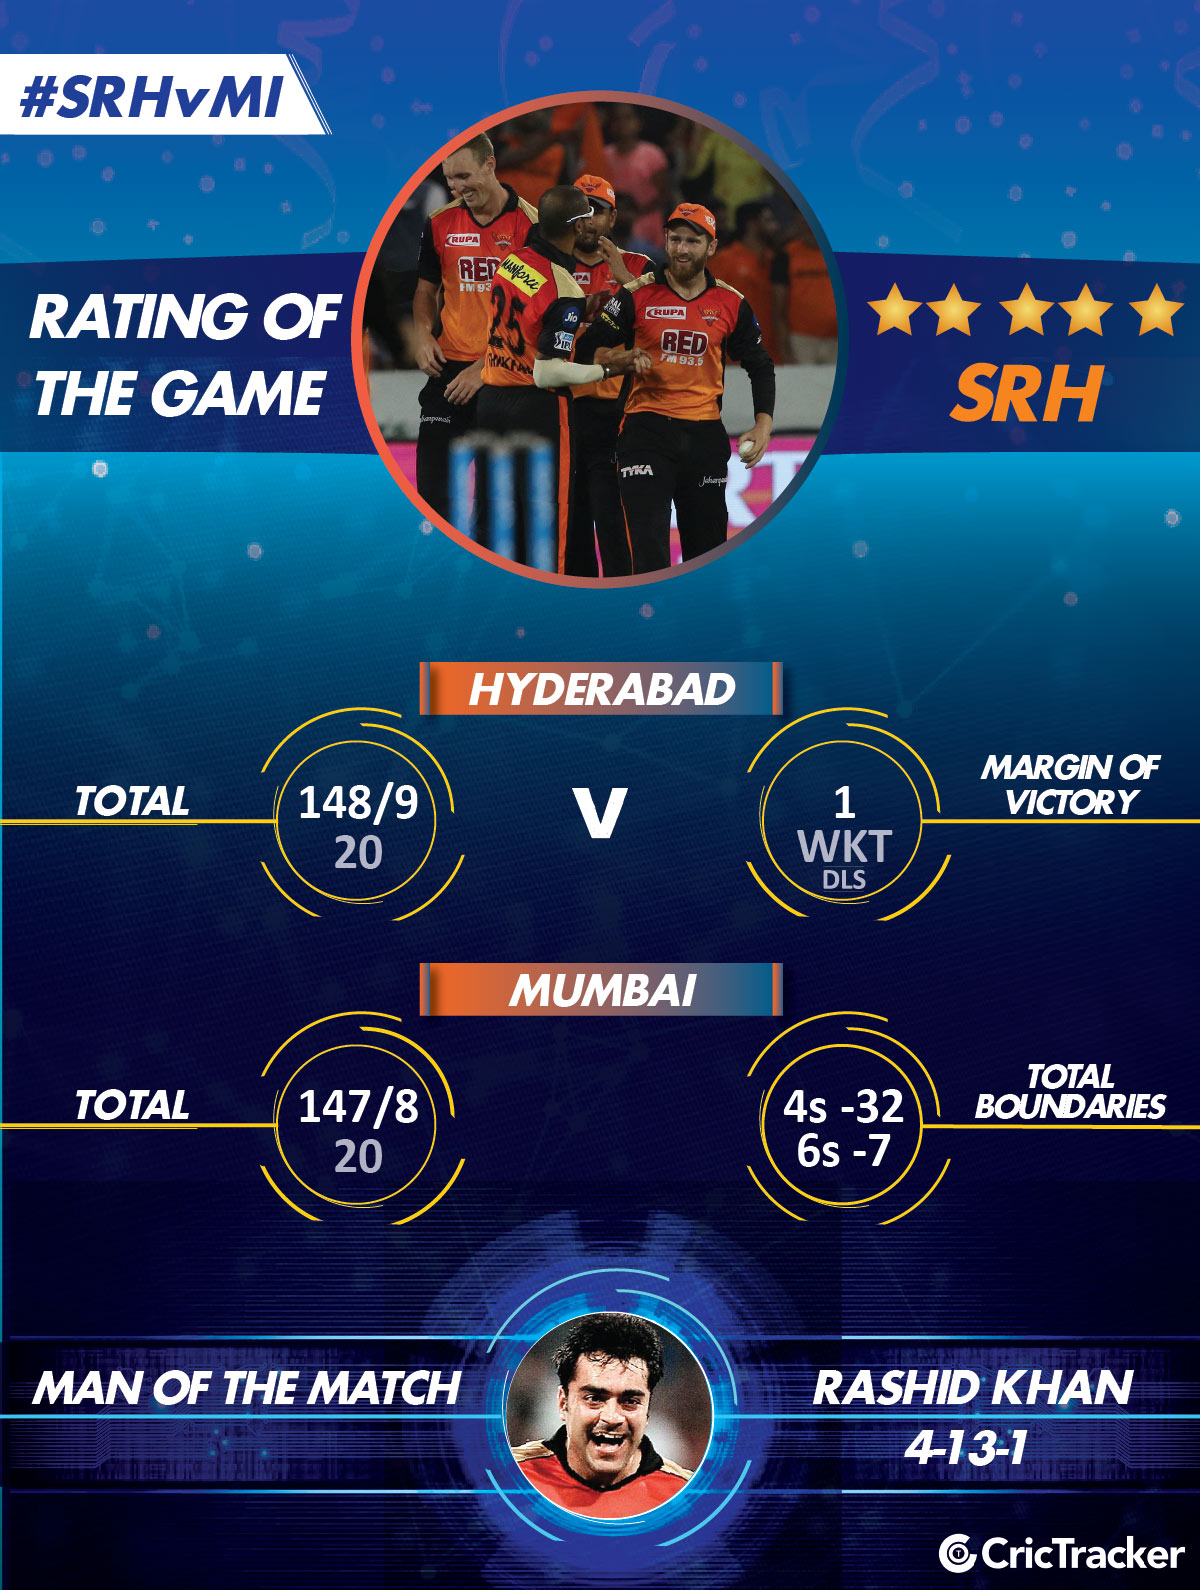 IPL2018-SRHvMI-Rating-of-the-game